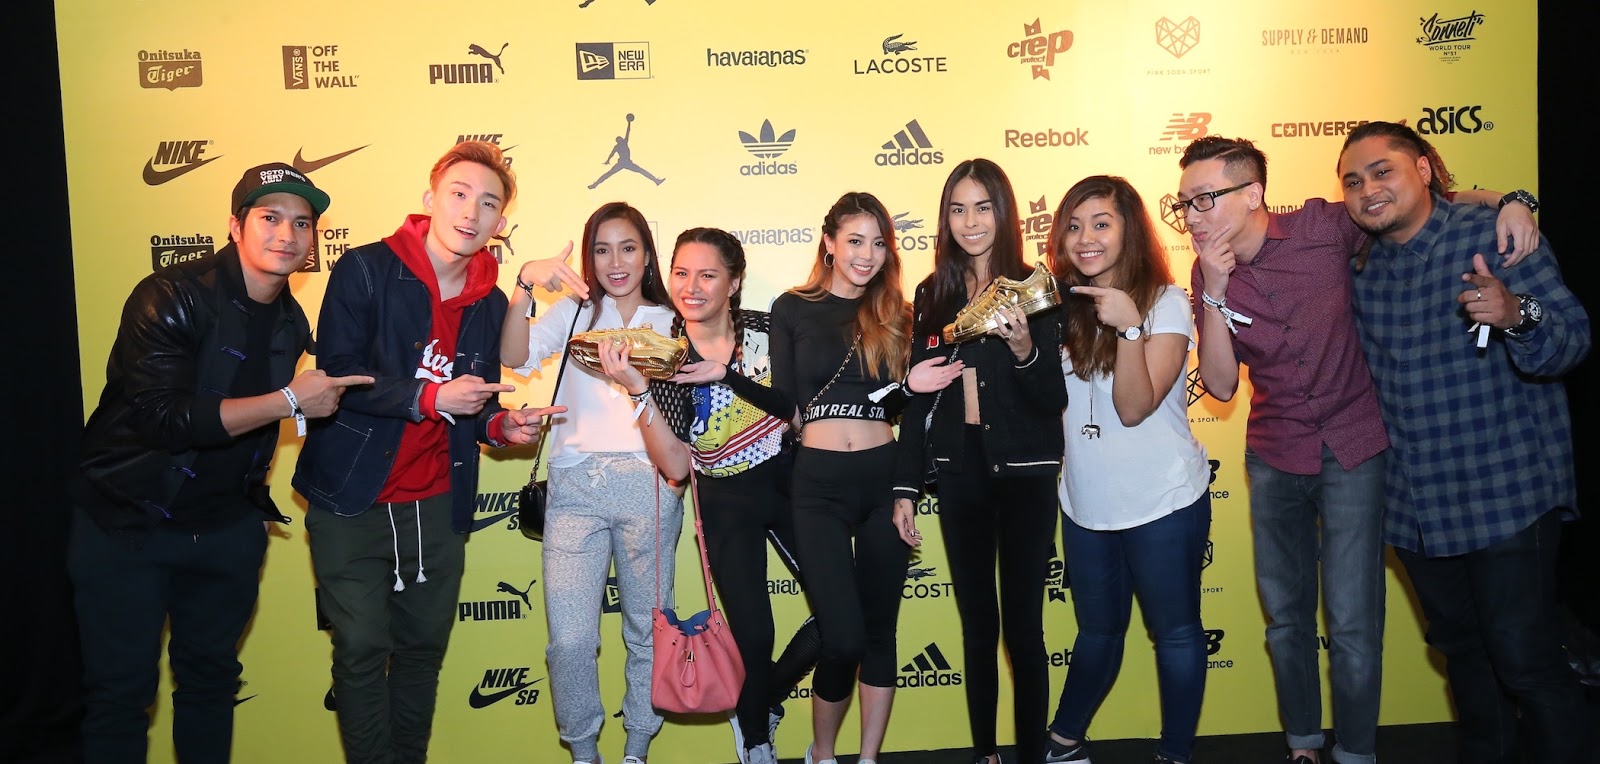 adidas superstar jd sports malaysia